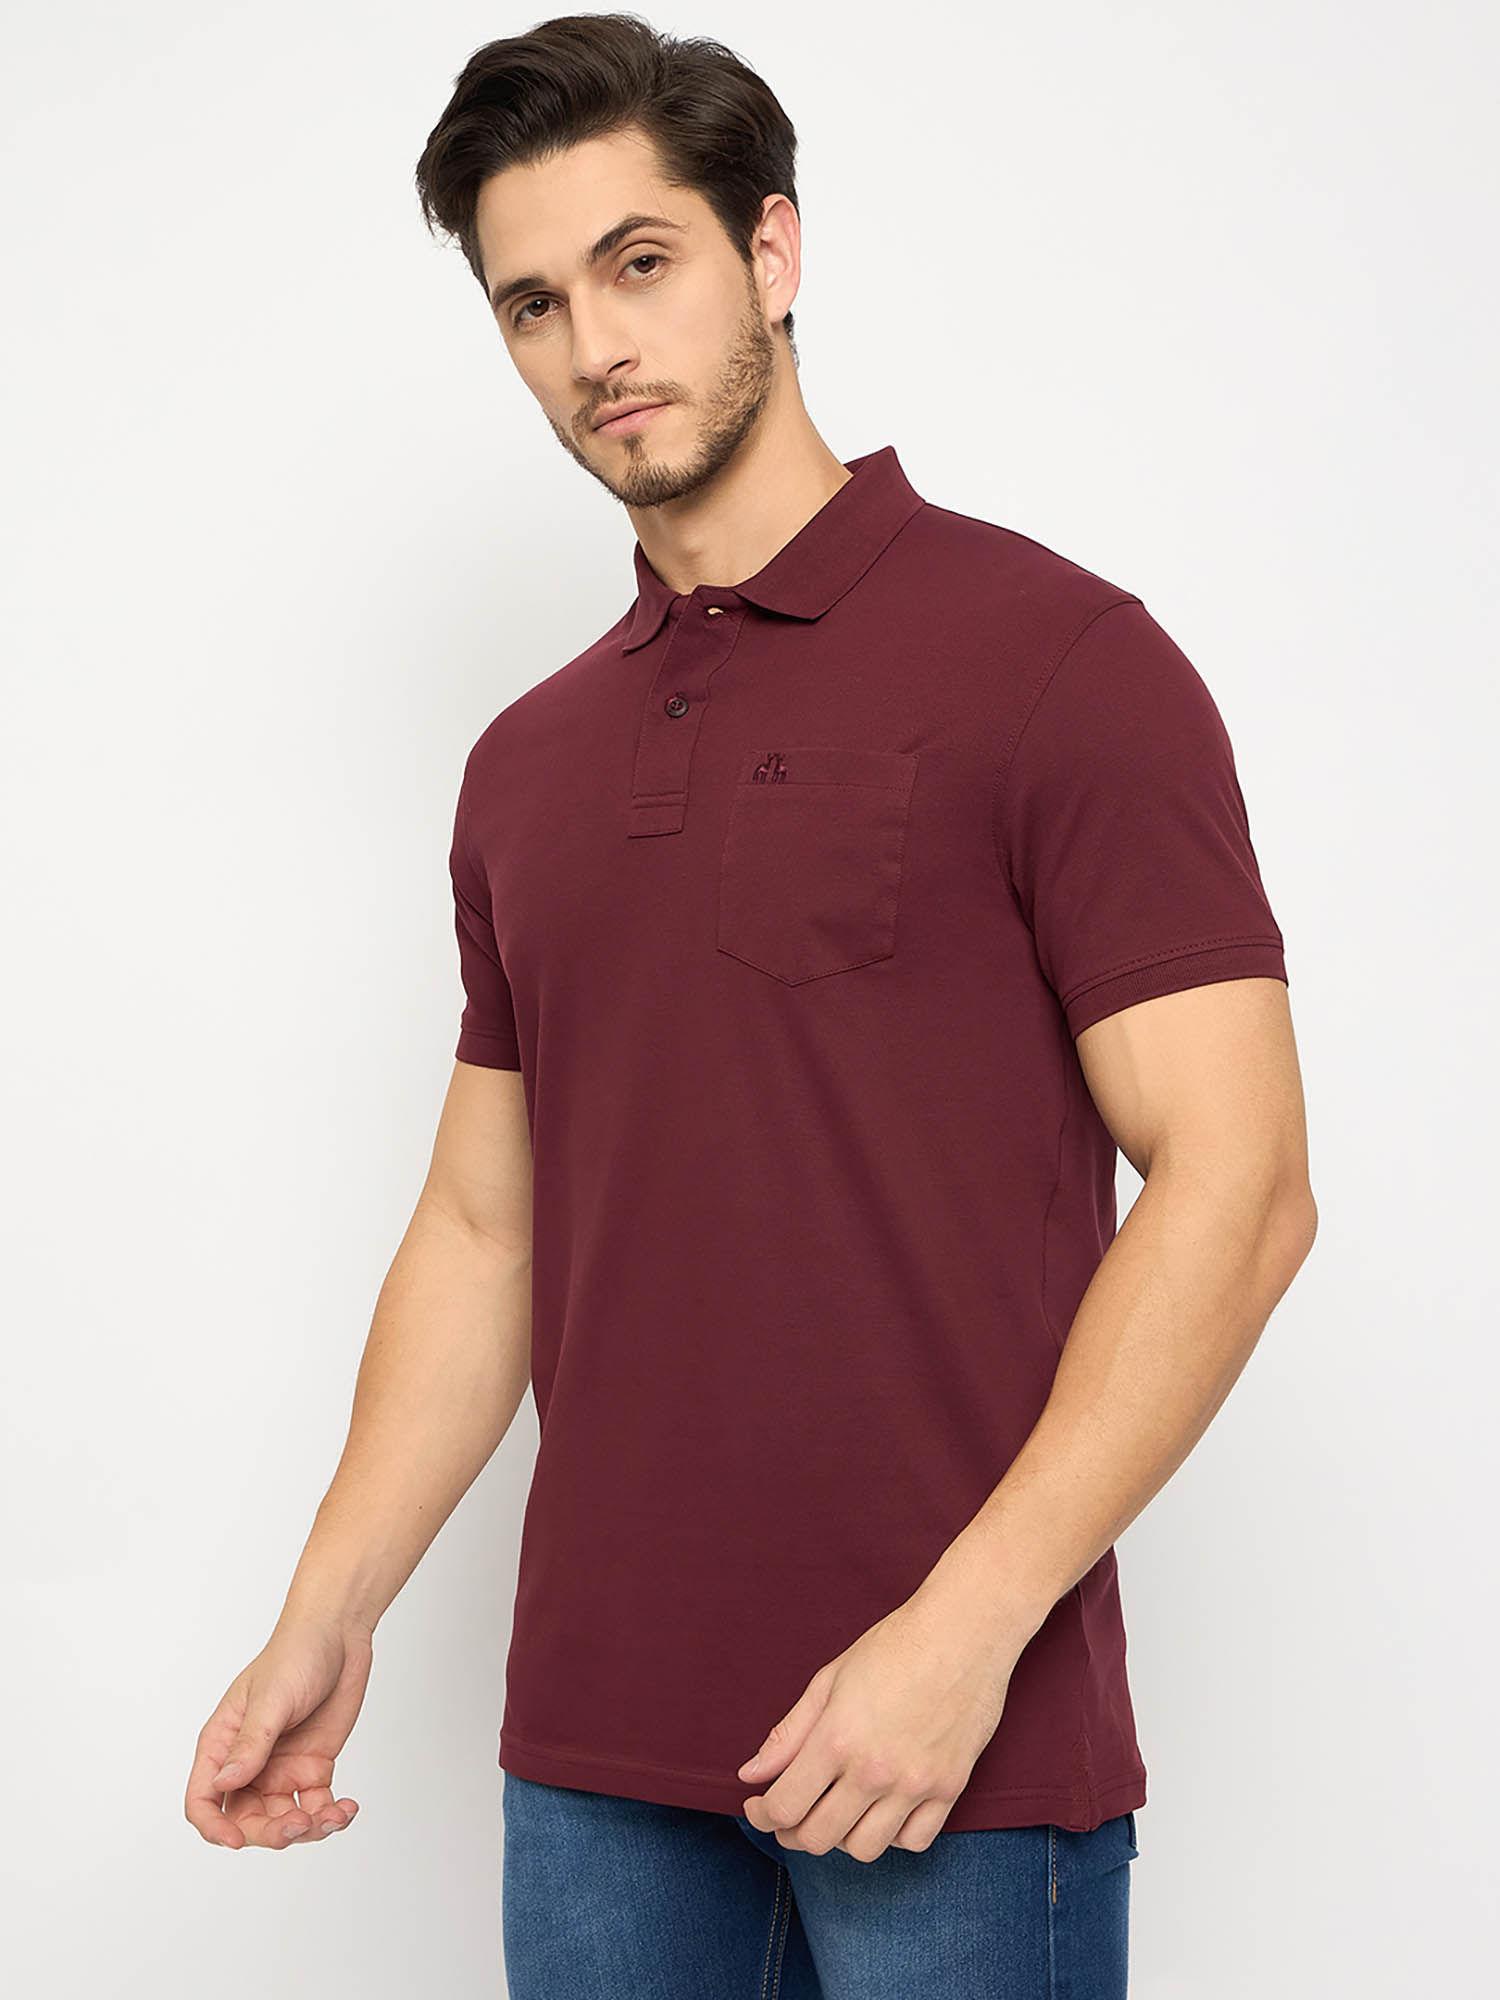 mens half sleeves wine polo t-shirt